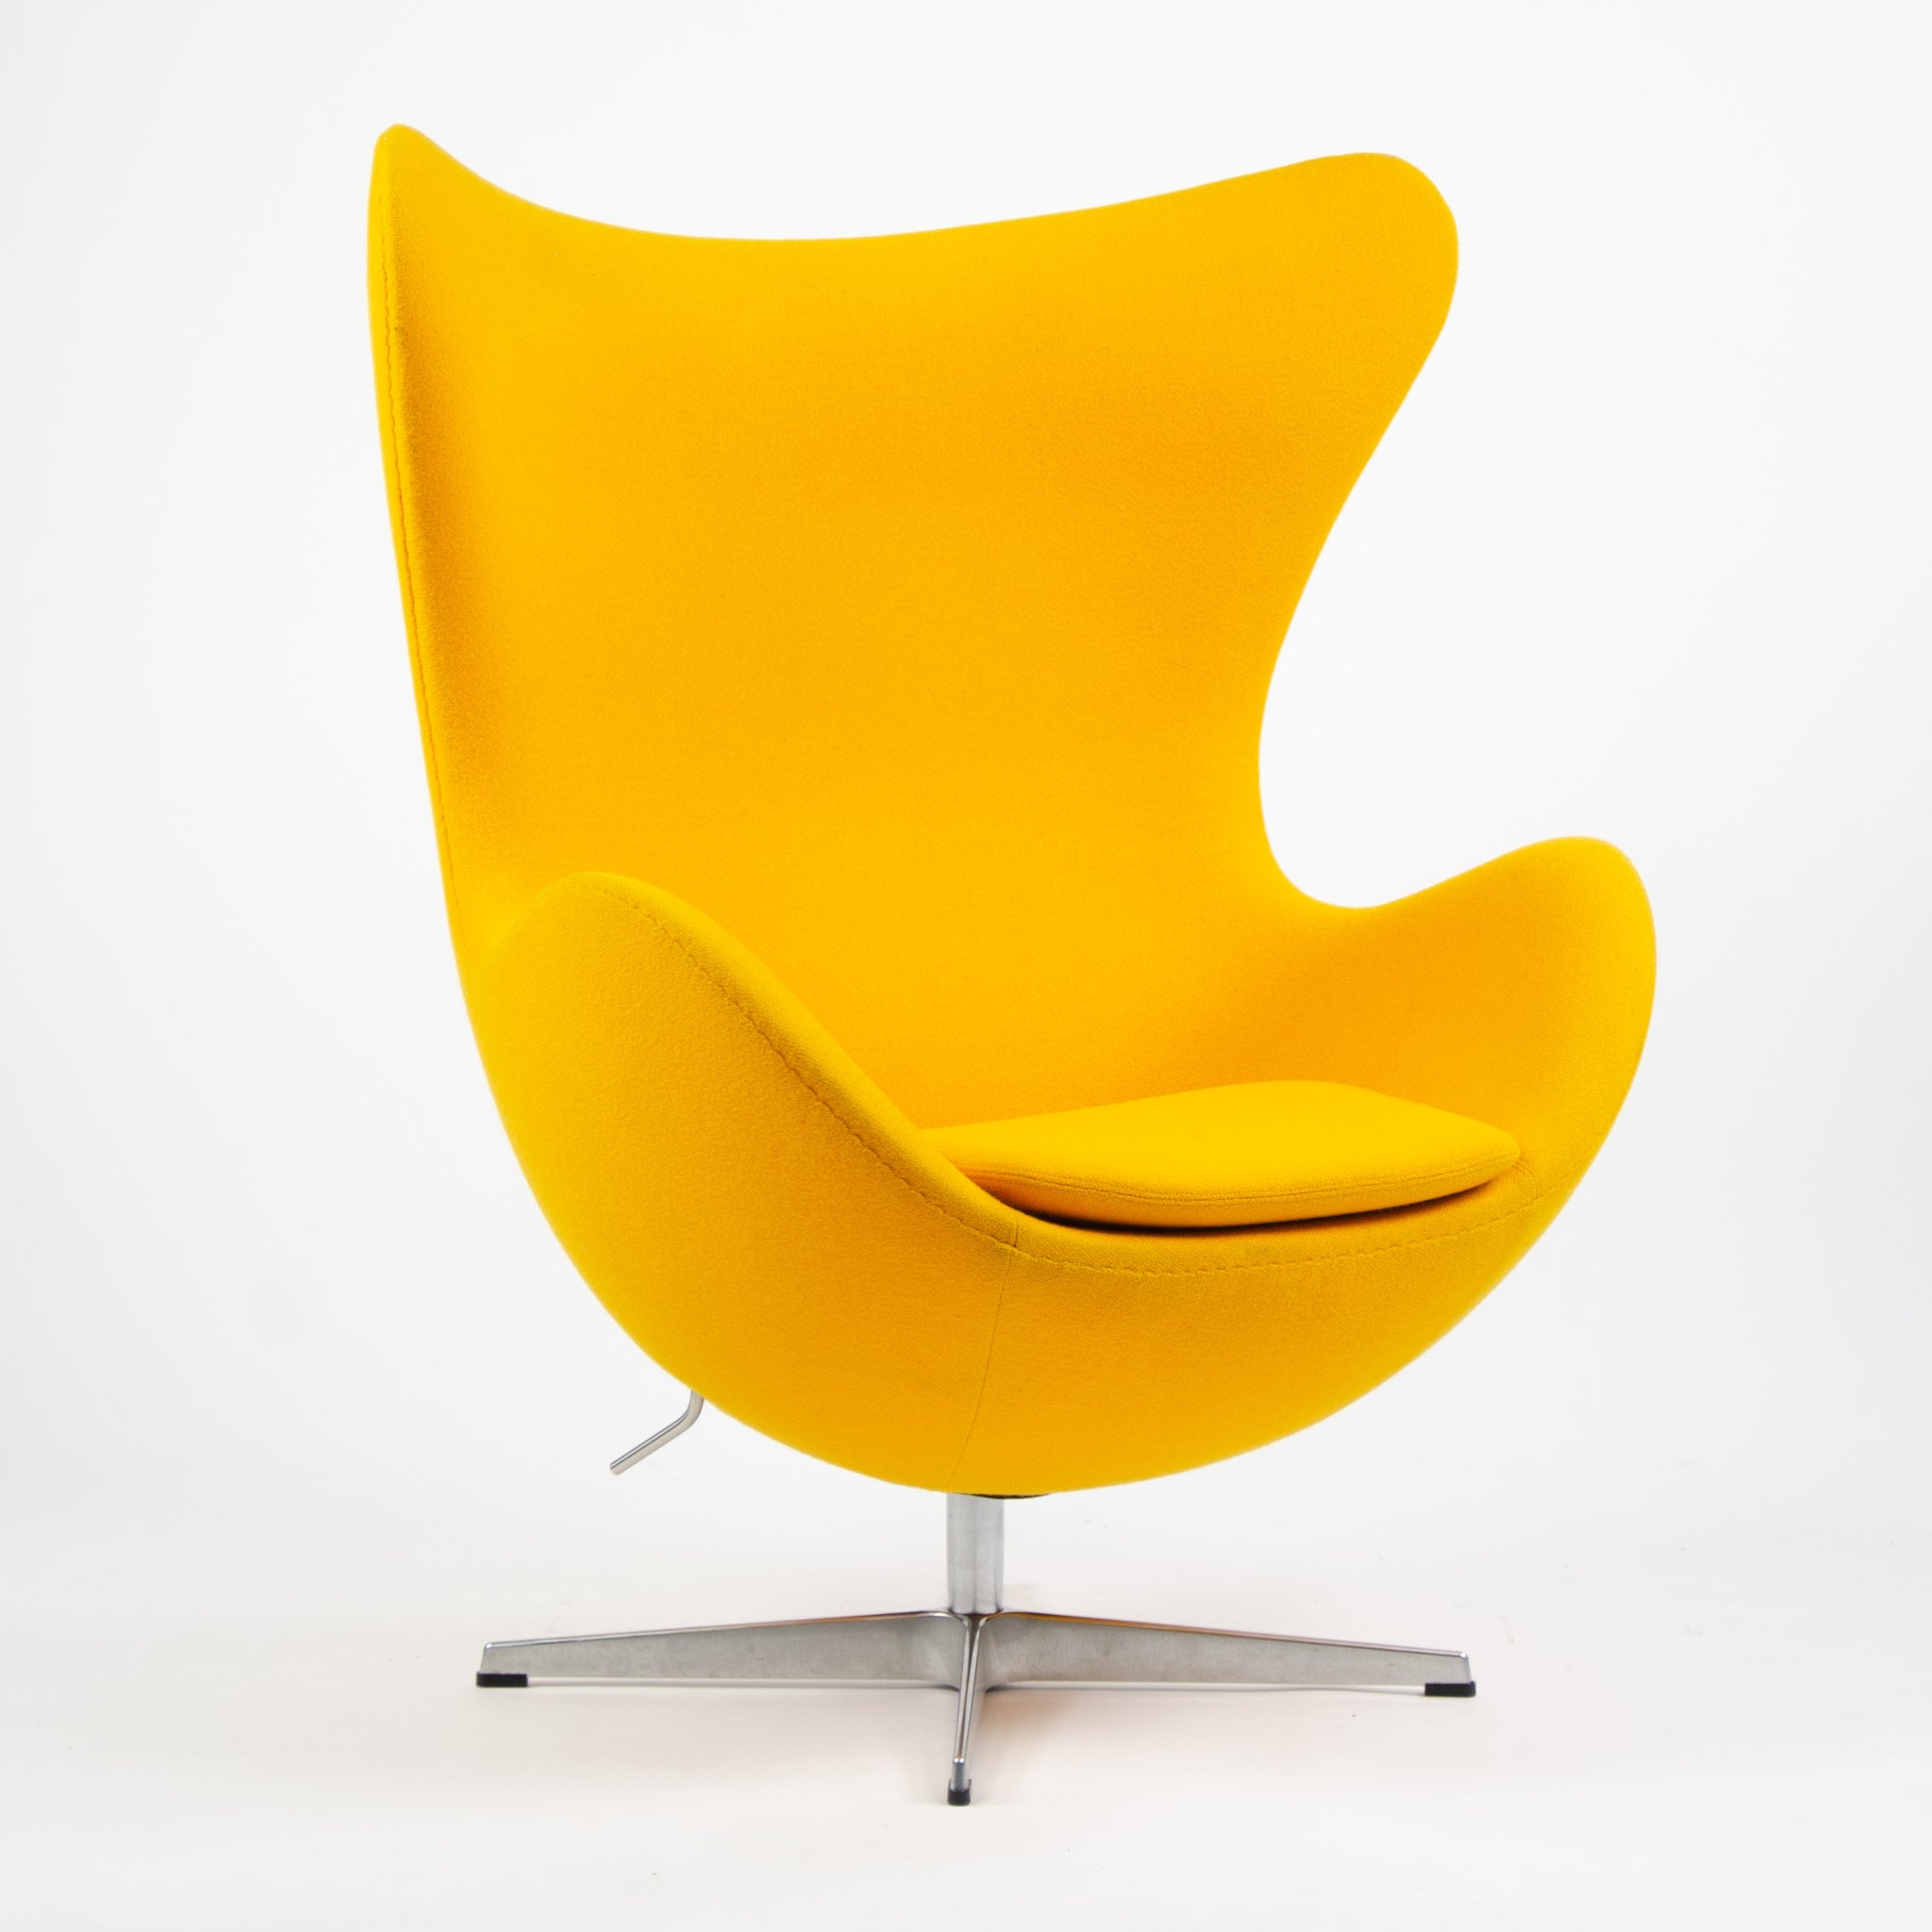 SOLD 2003 Egg Chair by Arne Jacobsen for Fritz Hansen Original Fabric Denmark Yellow